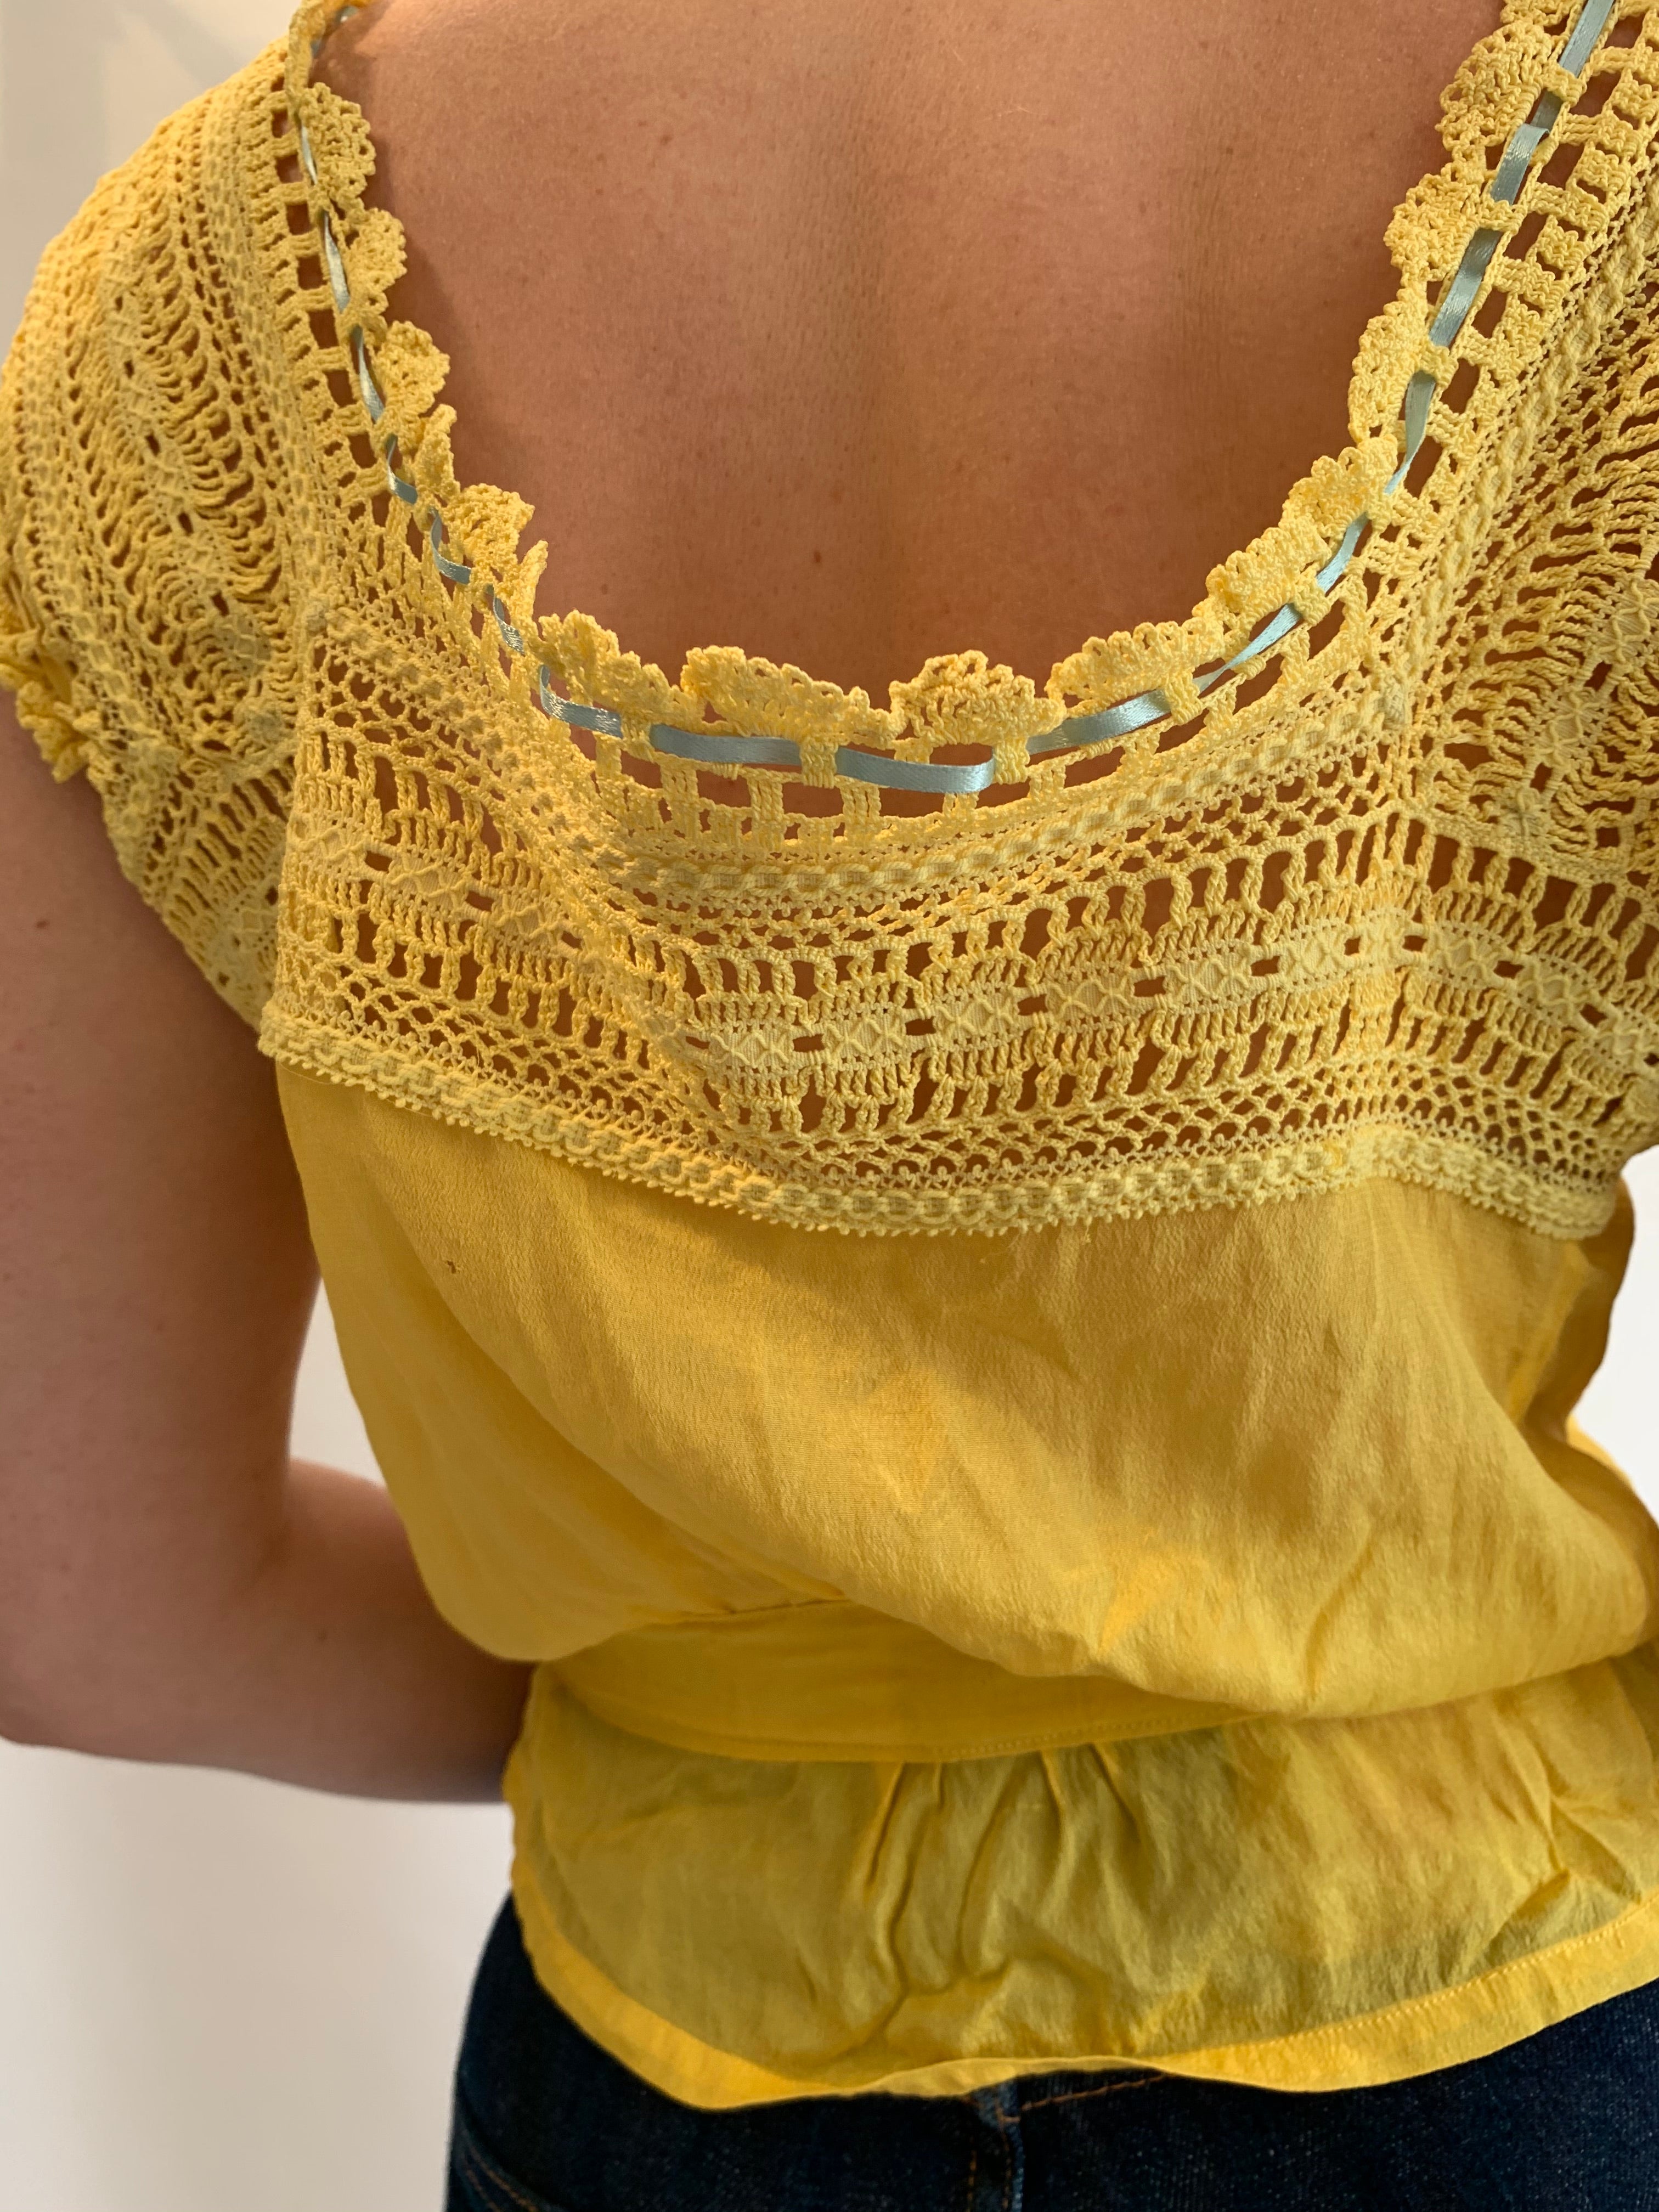 Yellow Silk & Cotton Crochet Top